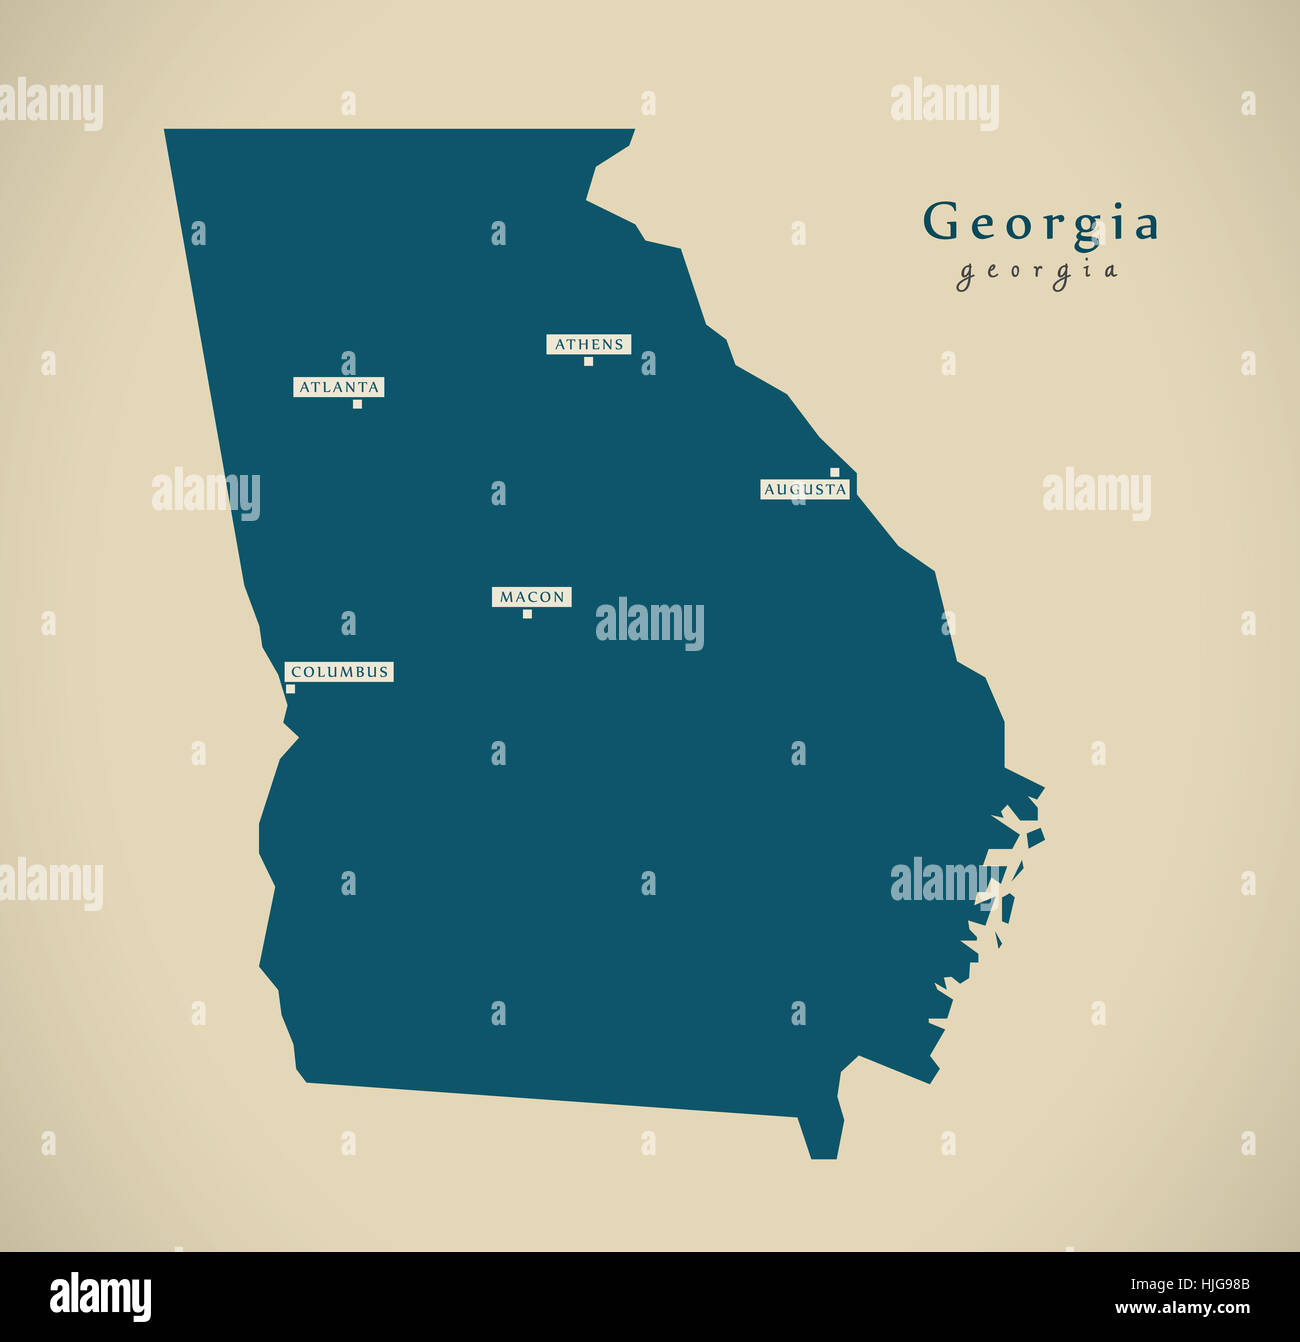 Moderne Karte - Georgia USA Bundesstaat Abbildung silhouette Stockfoto